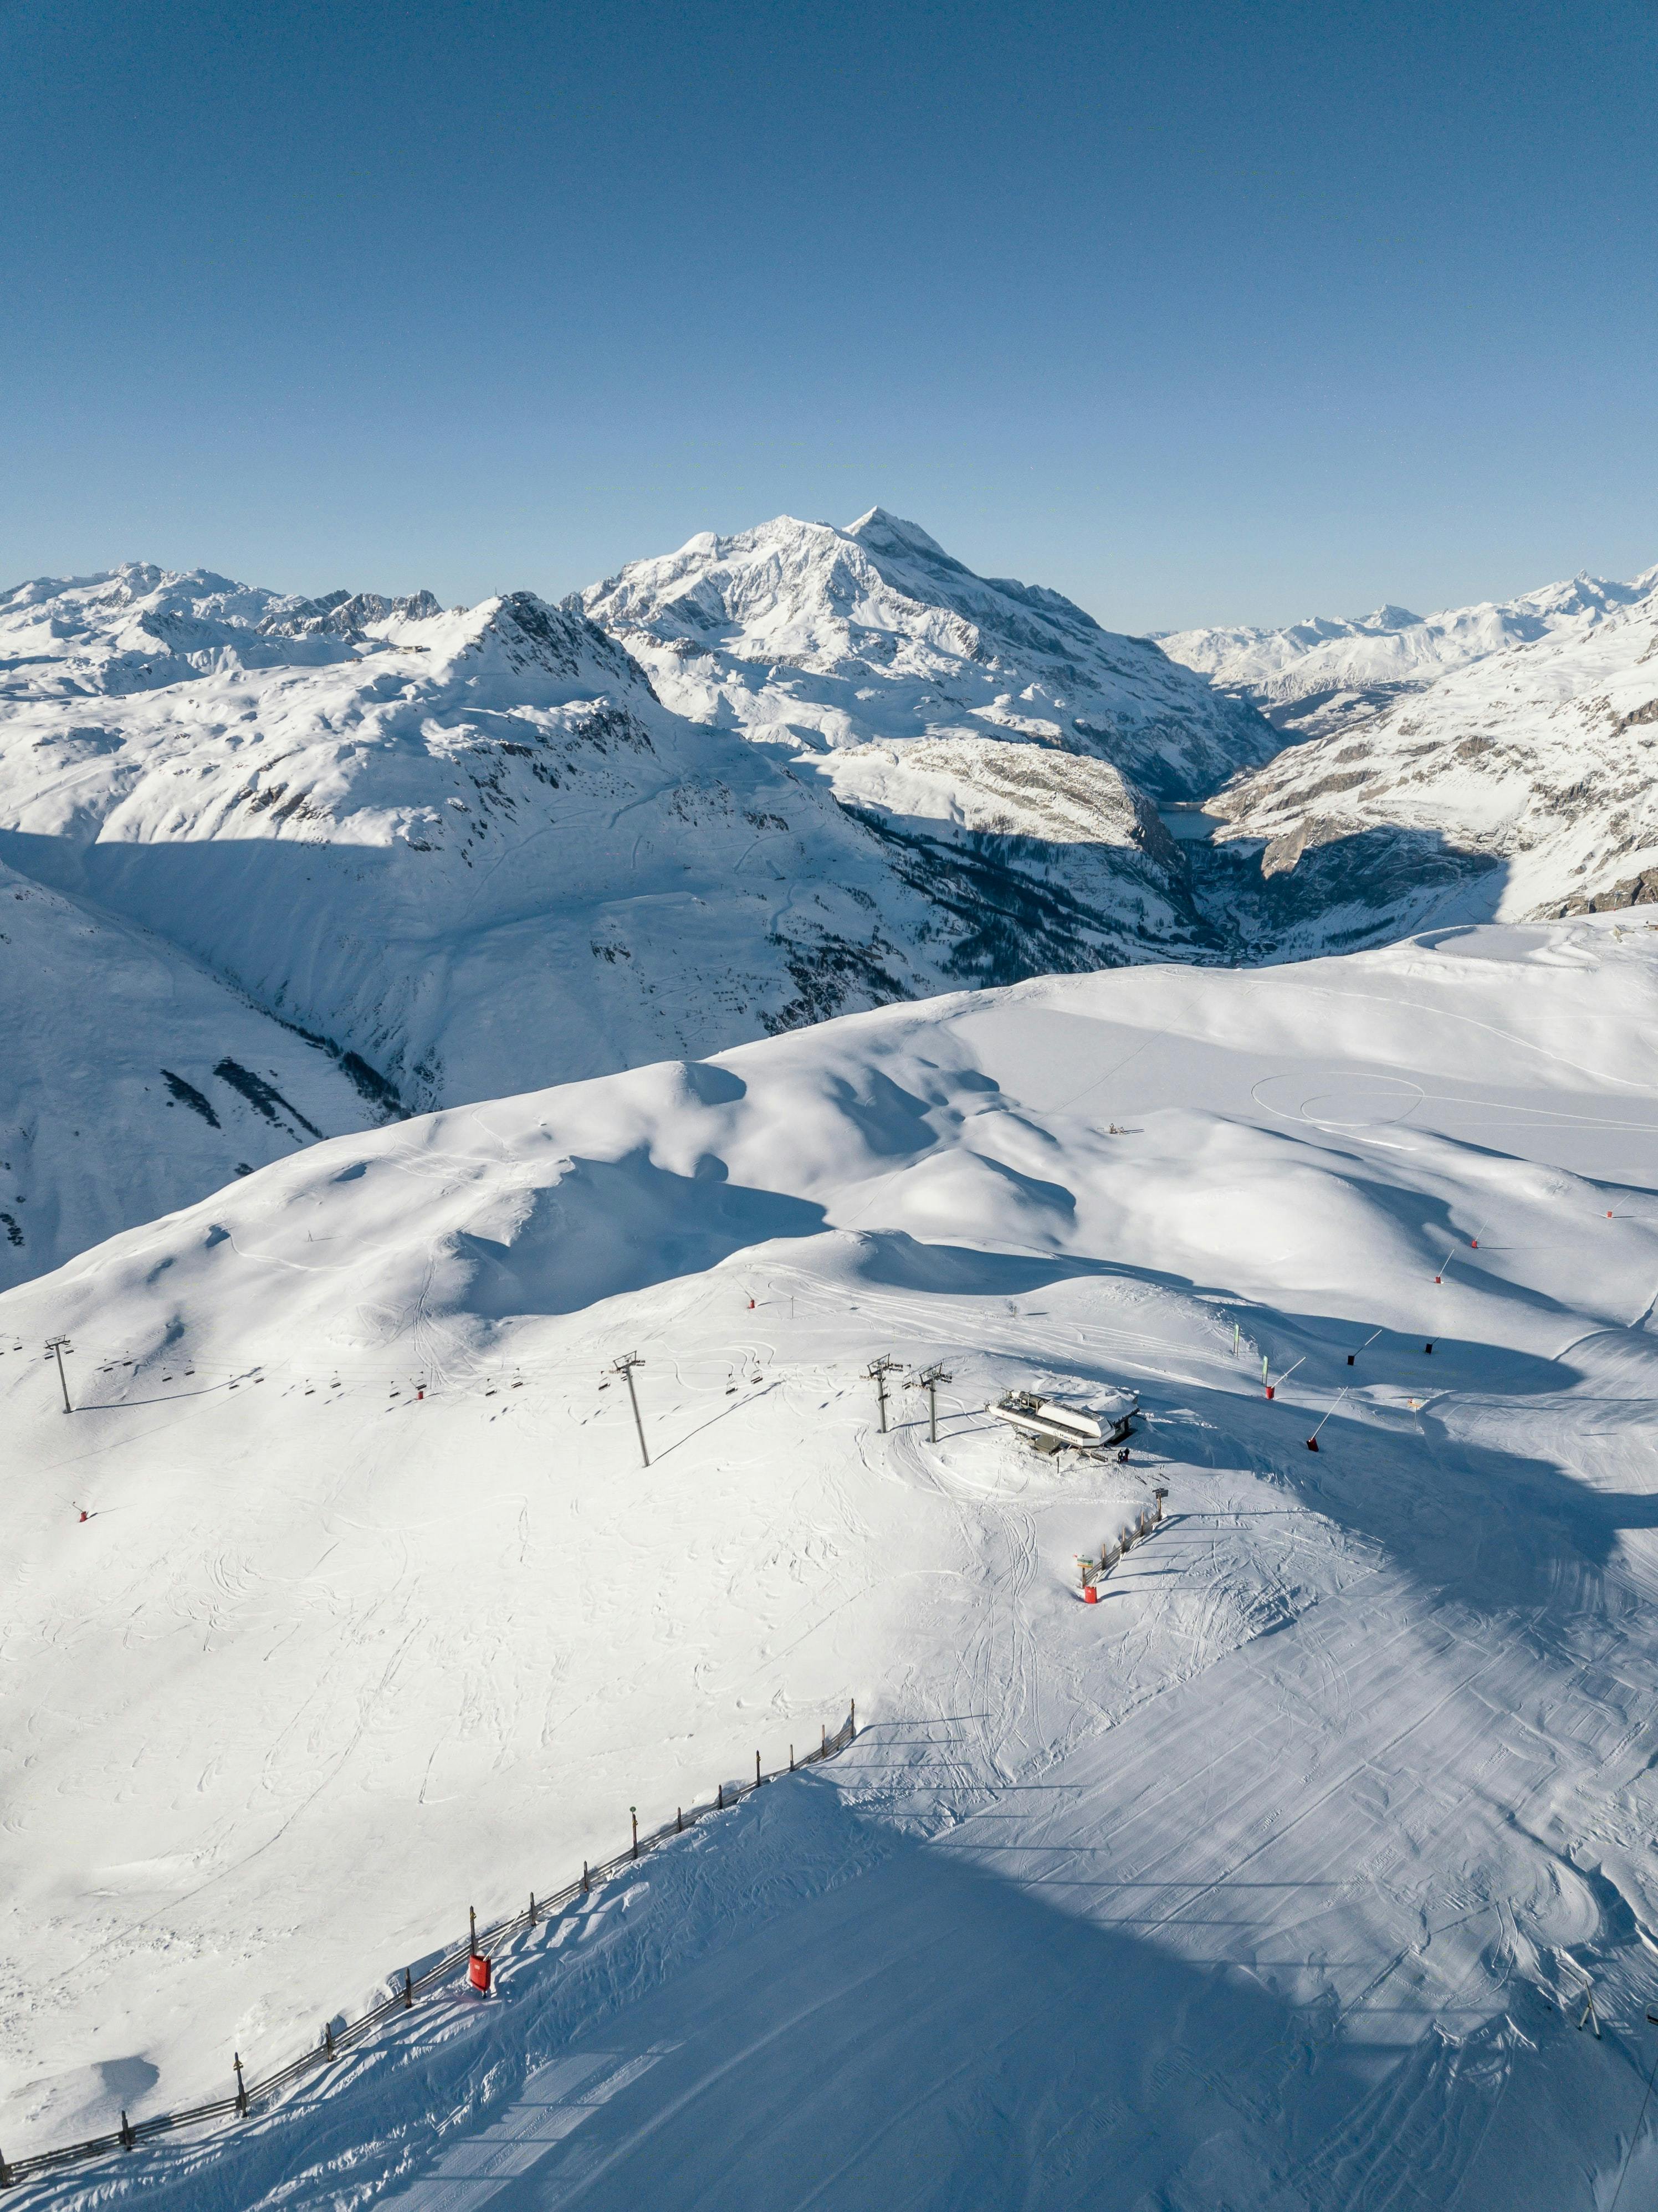  Tignes and Val d’Isere ski resorts